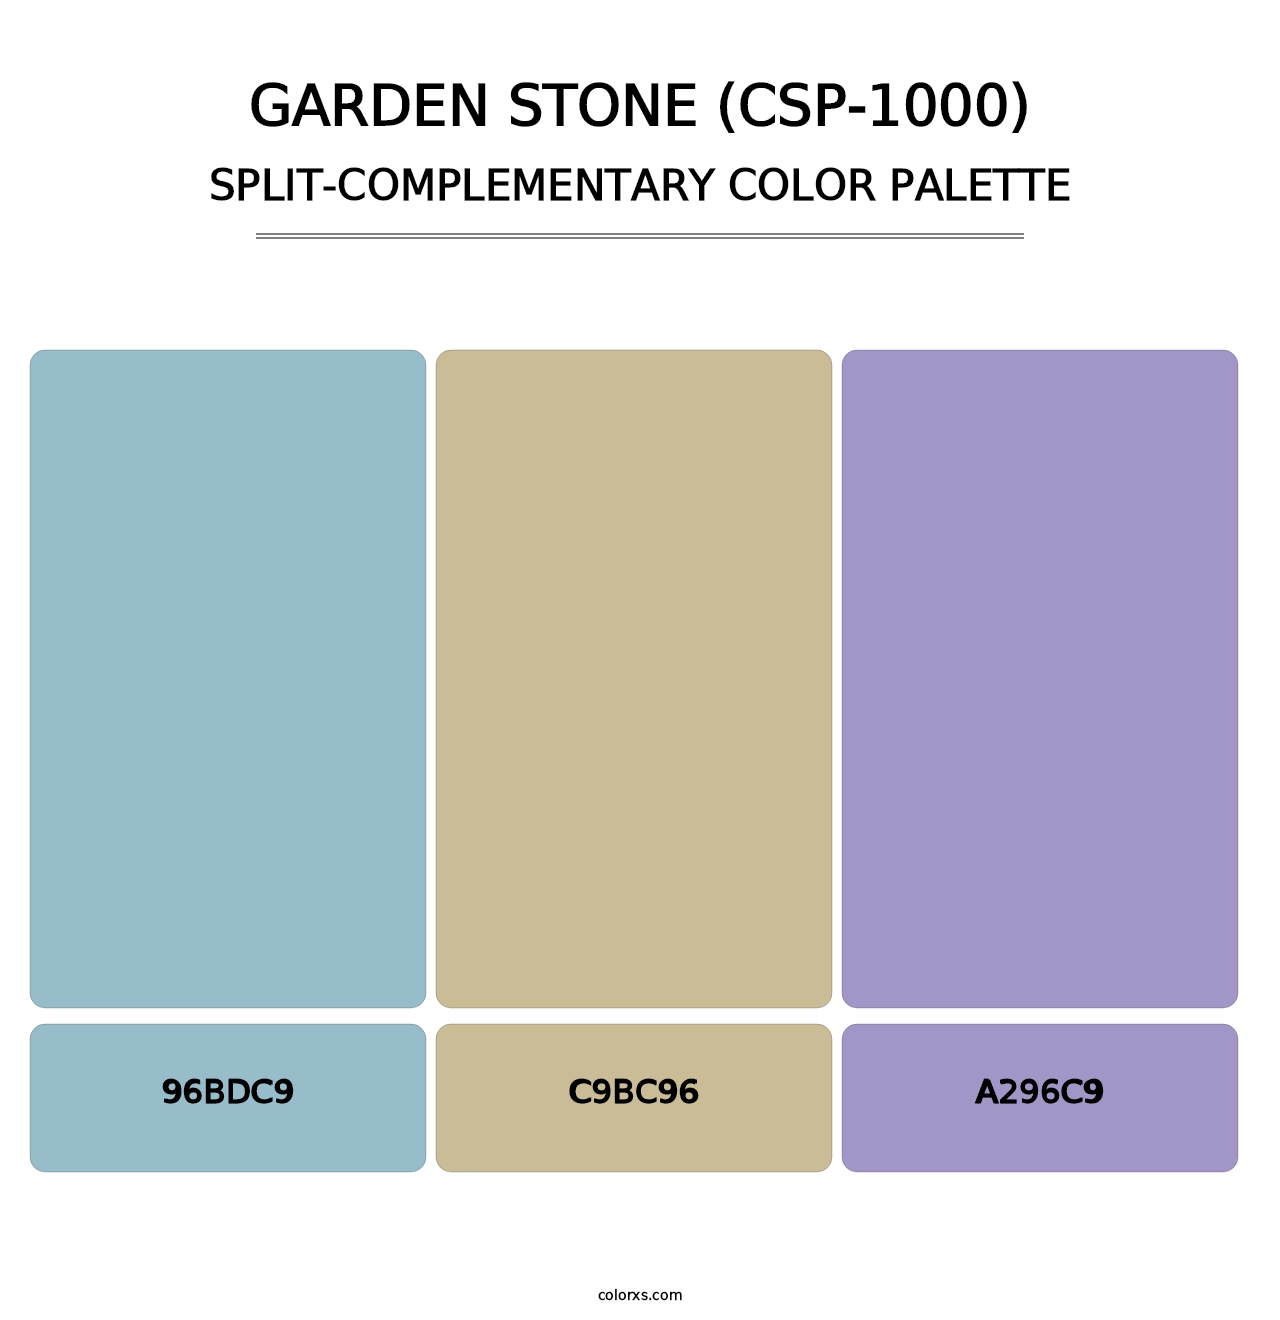 Garden Stone (CSP-1000) - Split-Complementary Color Palette